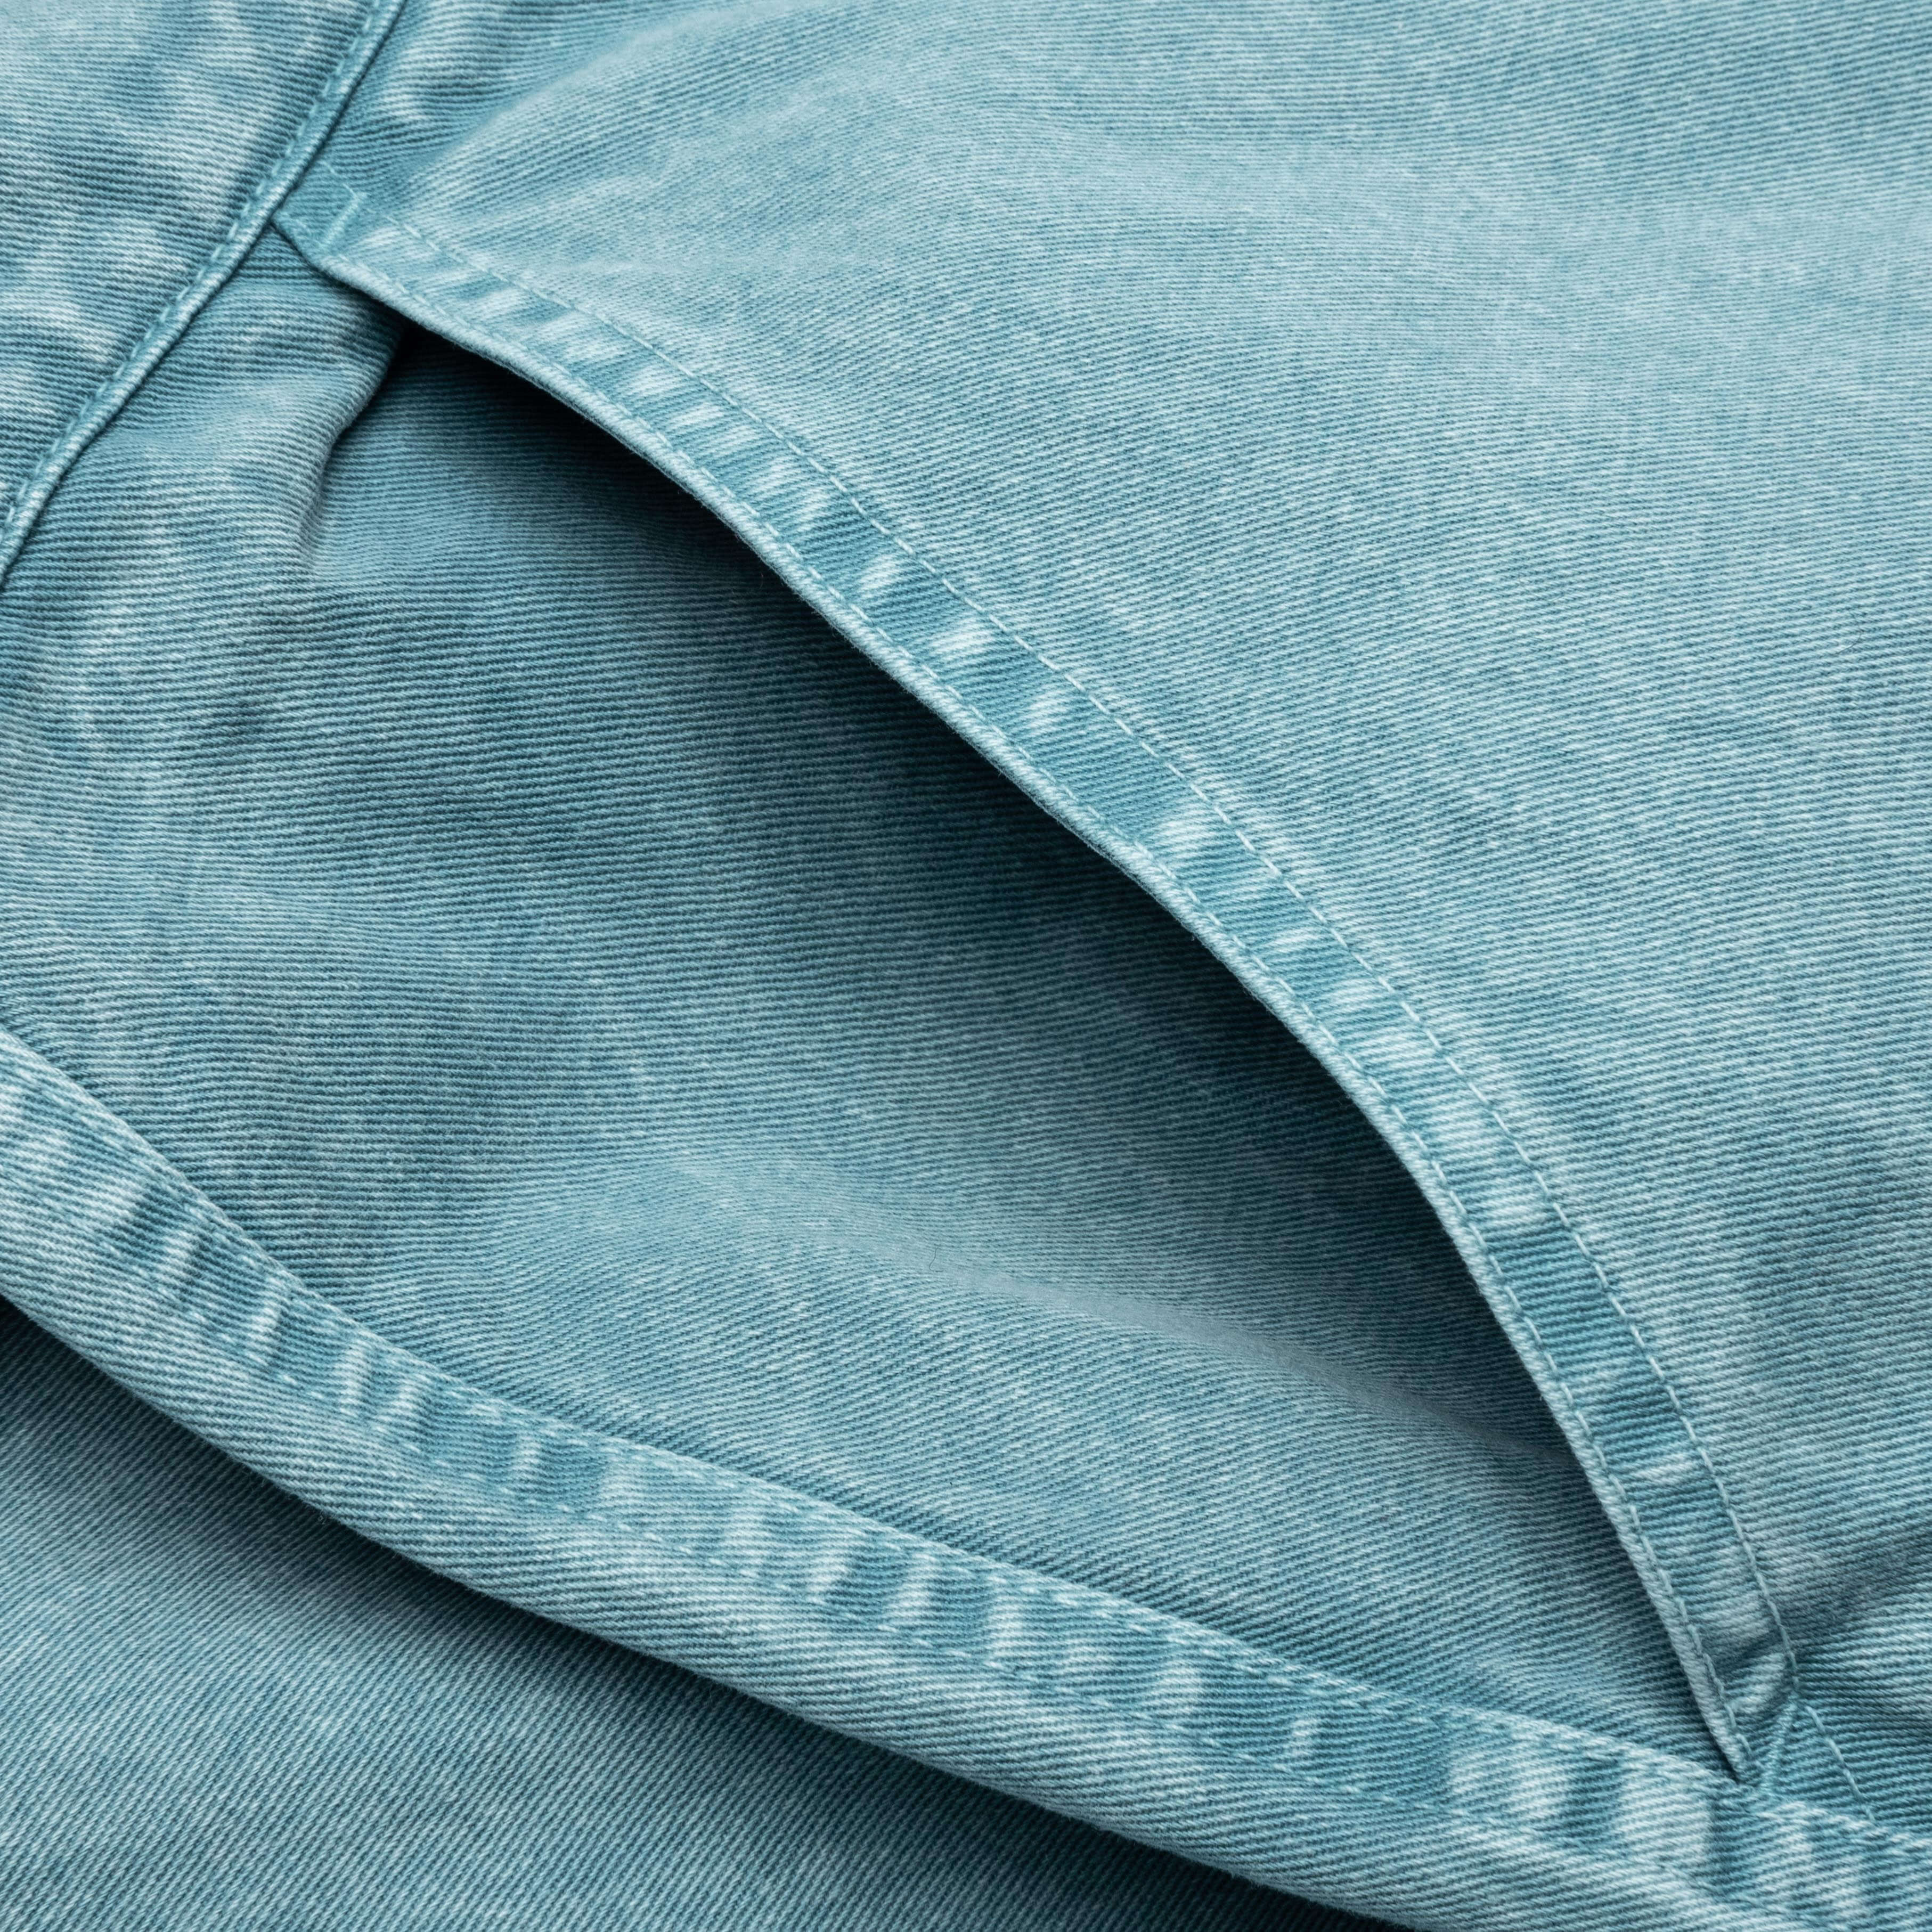 Washed Cotton Work Pant - Slate Blue, , large image number null